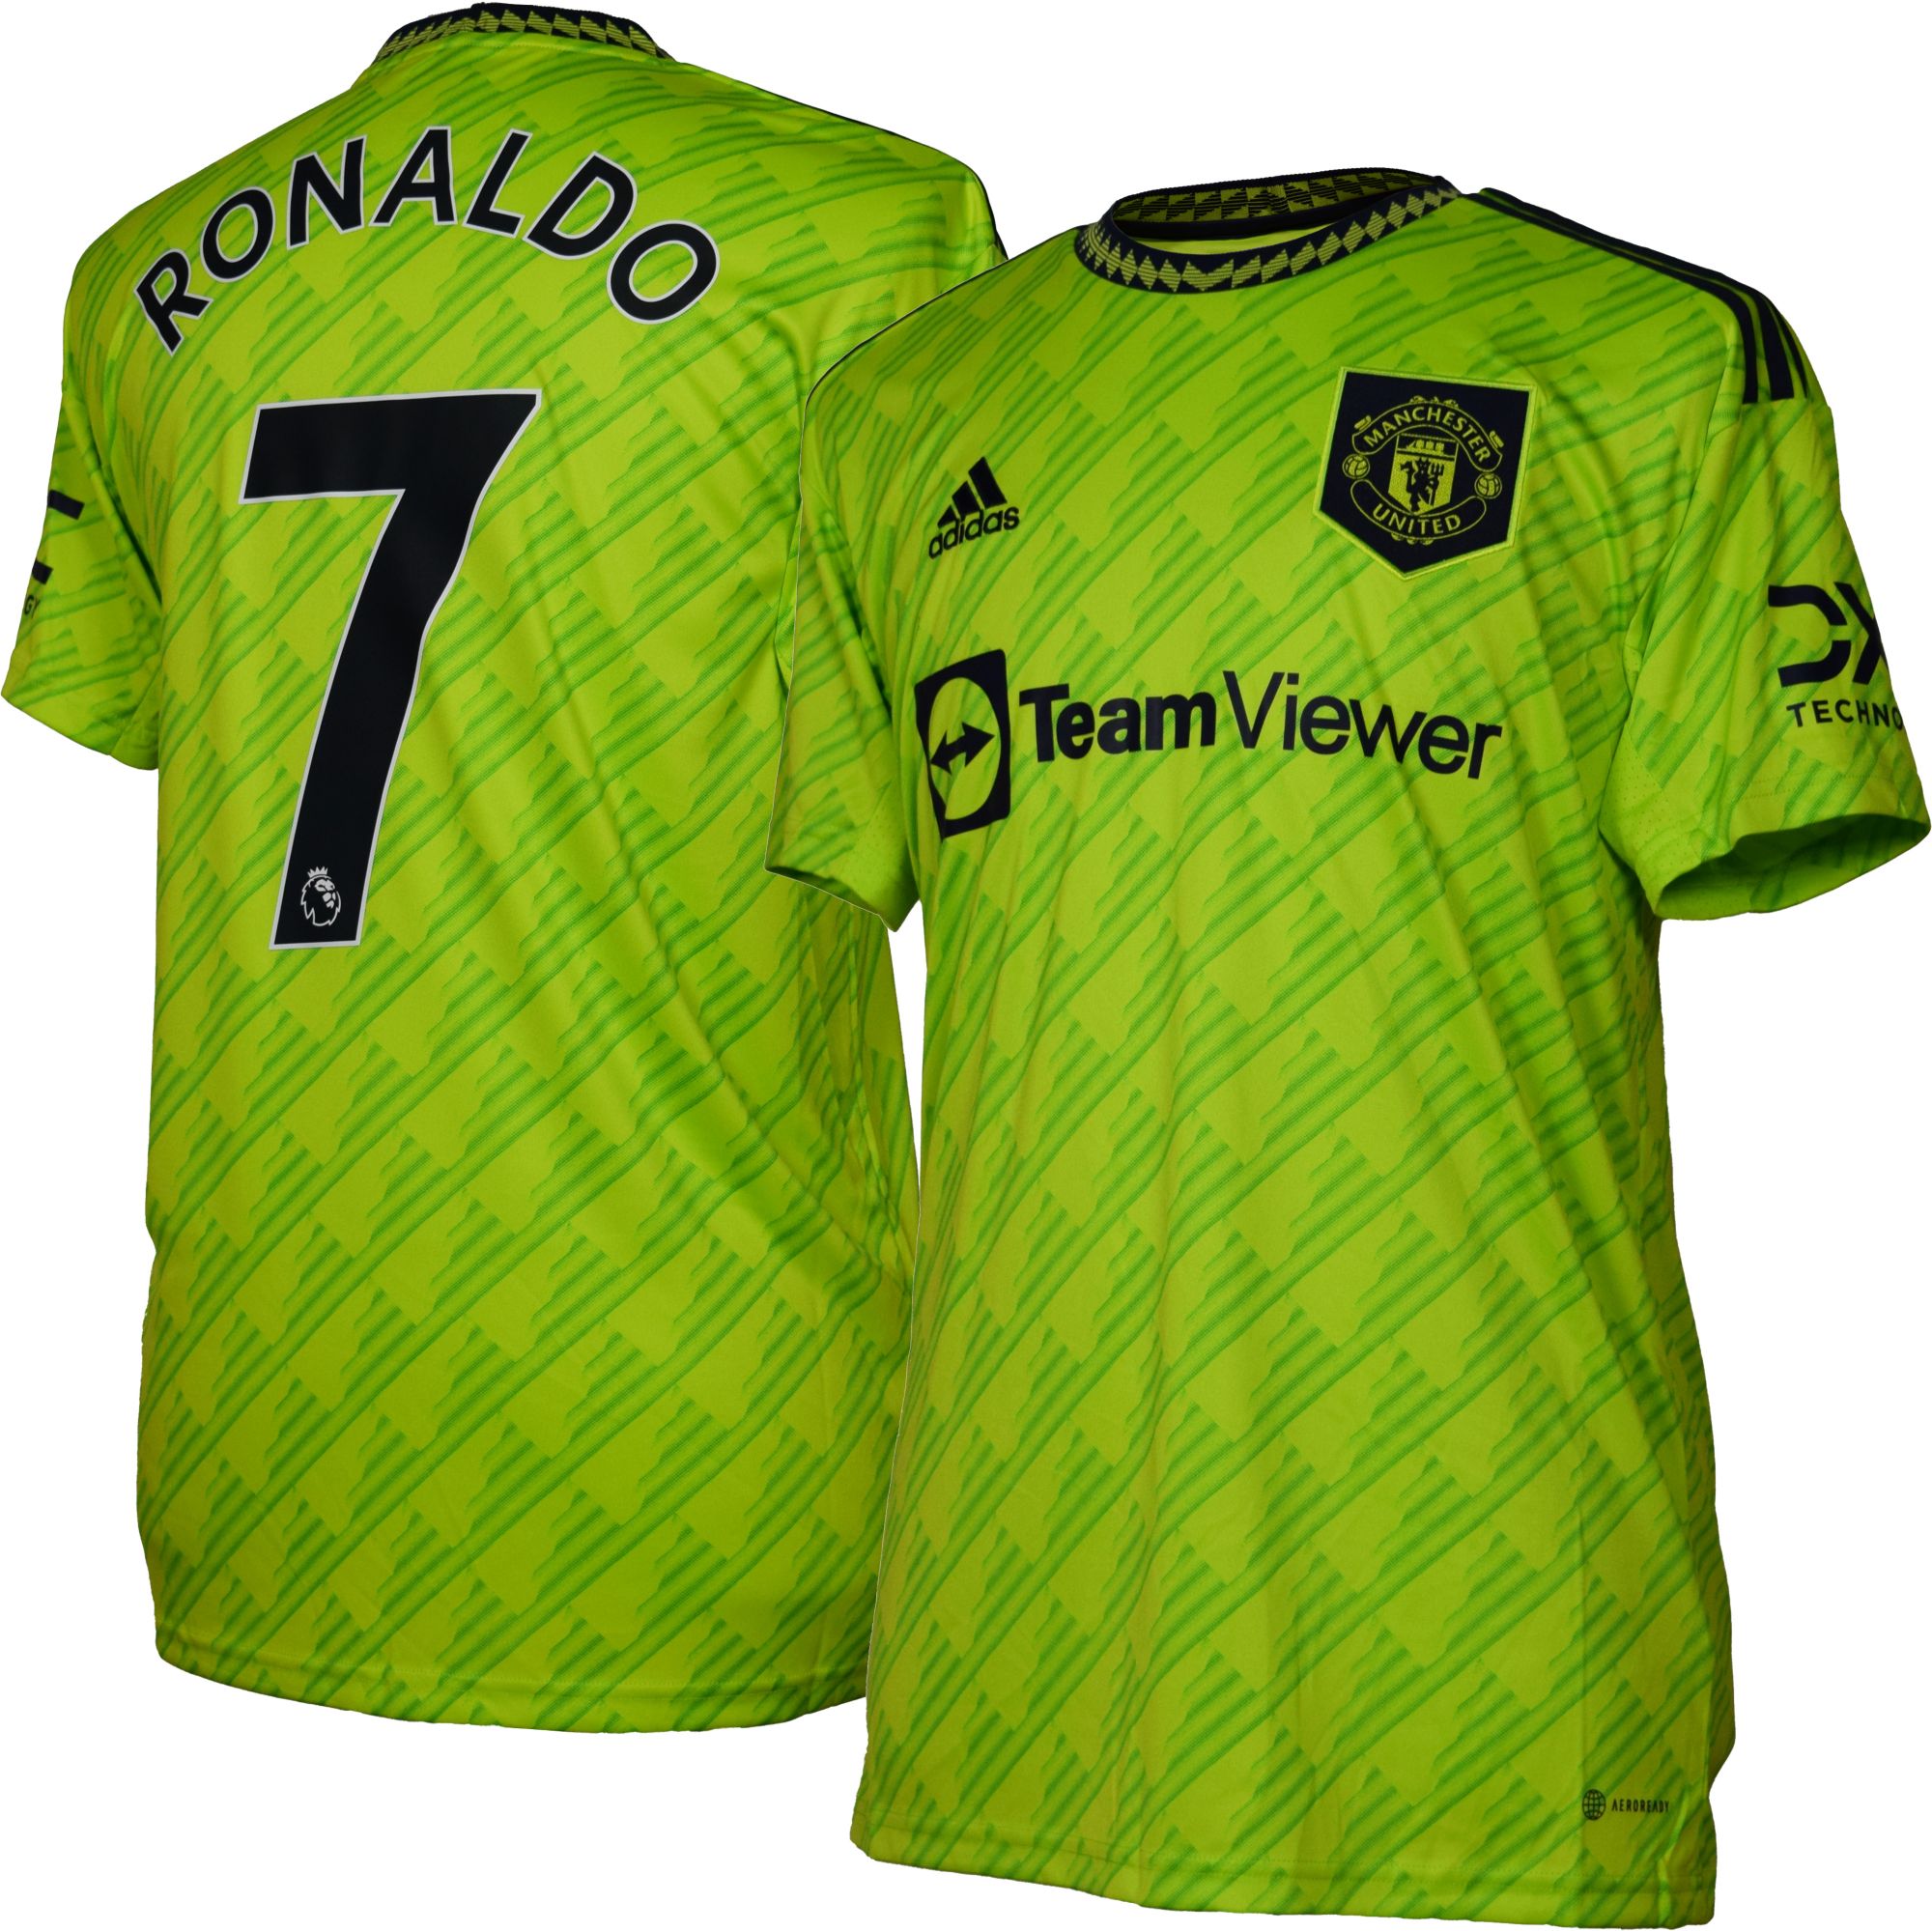 ronaldo jersey for kids